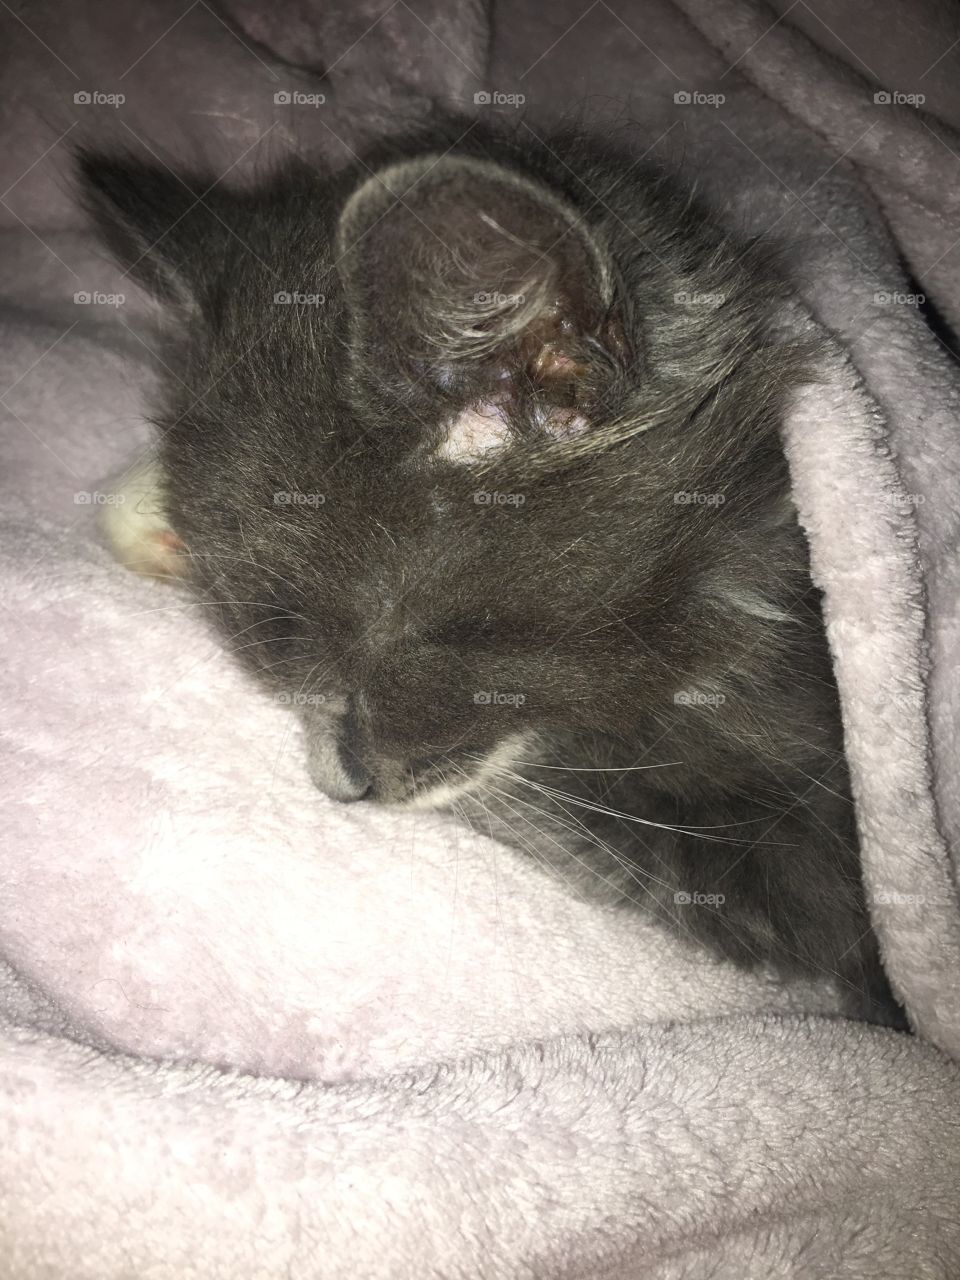 Sweet, sleeping little gray kitten. 